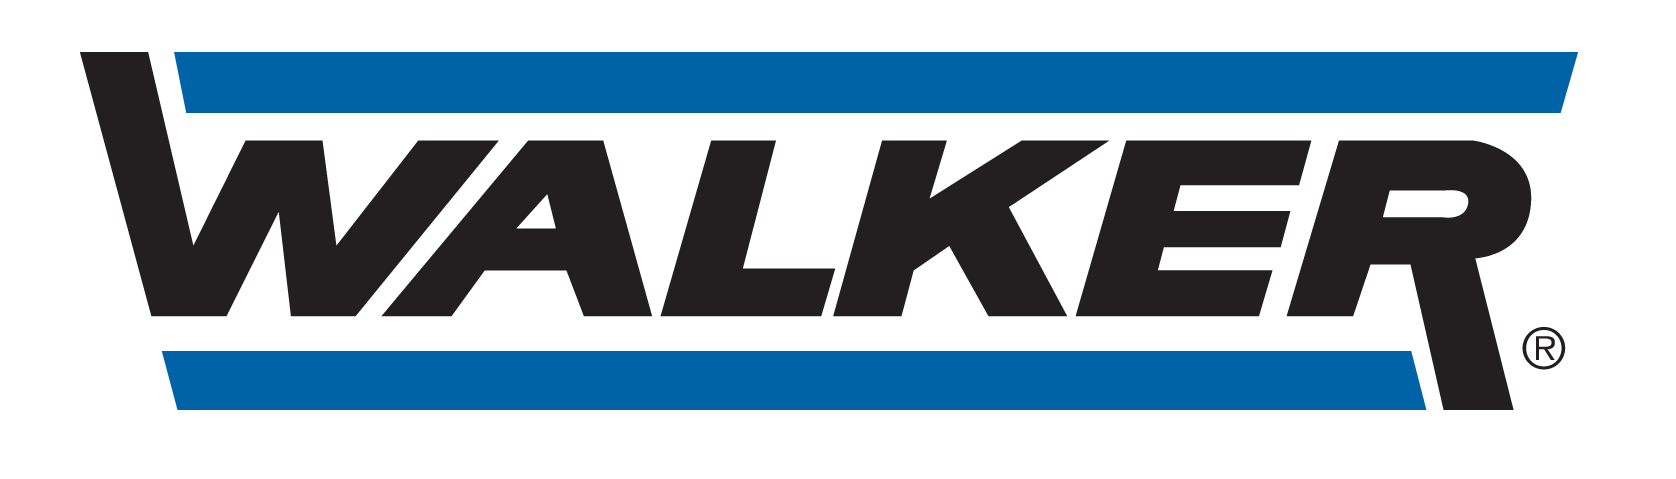 SB CARS GARAGE - logo Walker